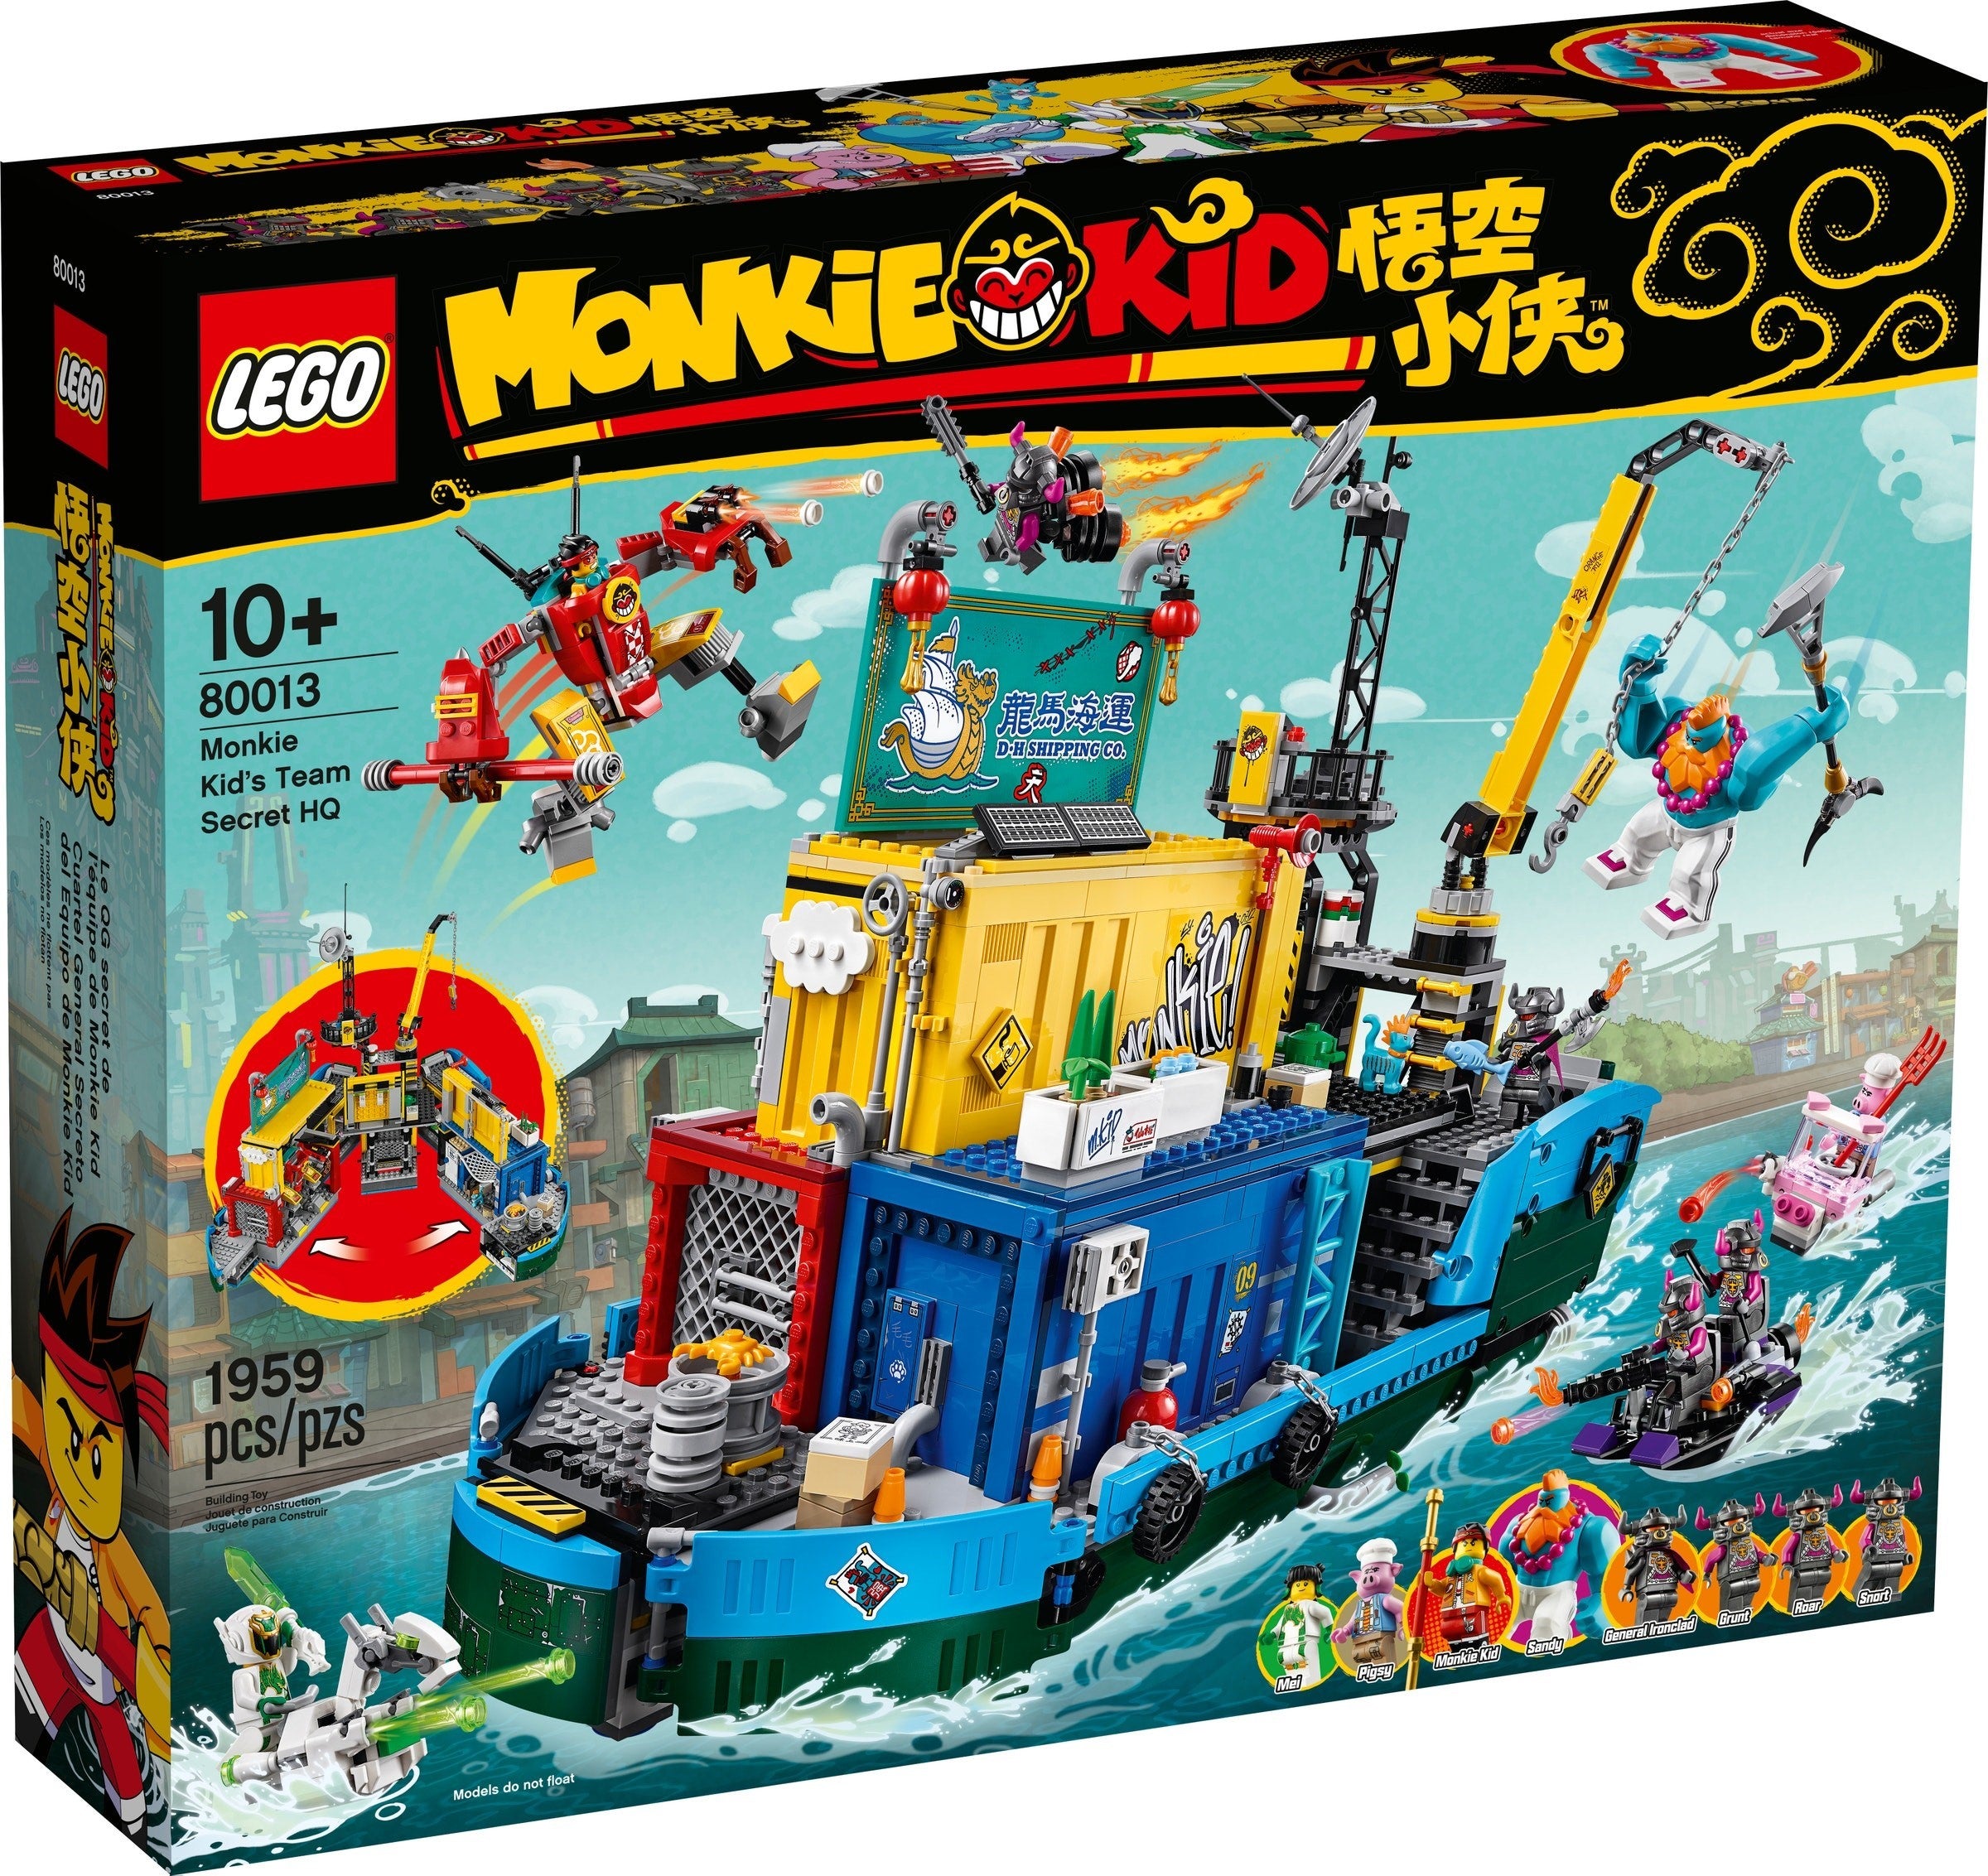 Lego Exclusive Monkie Kid 80013 - Monkie Kid's Team Secret HQ